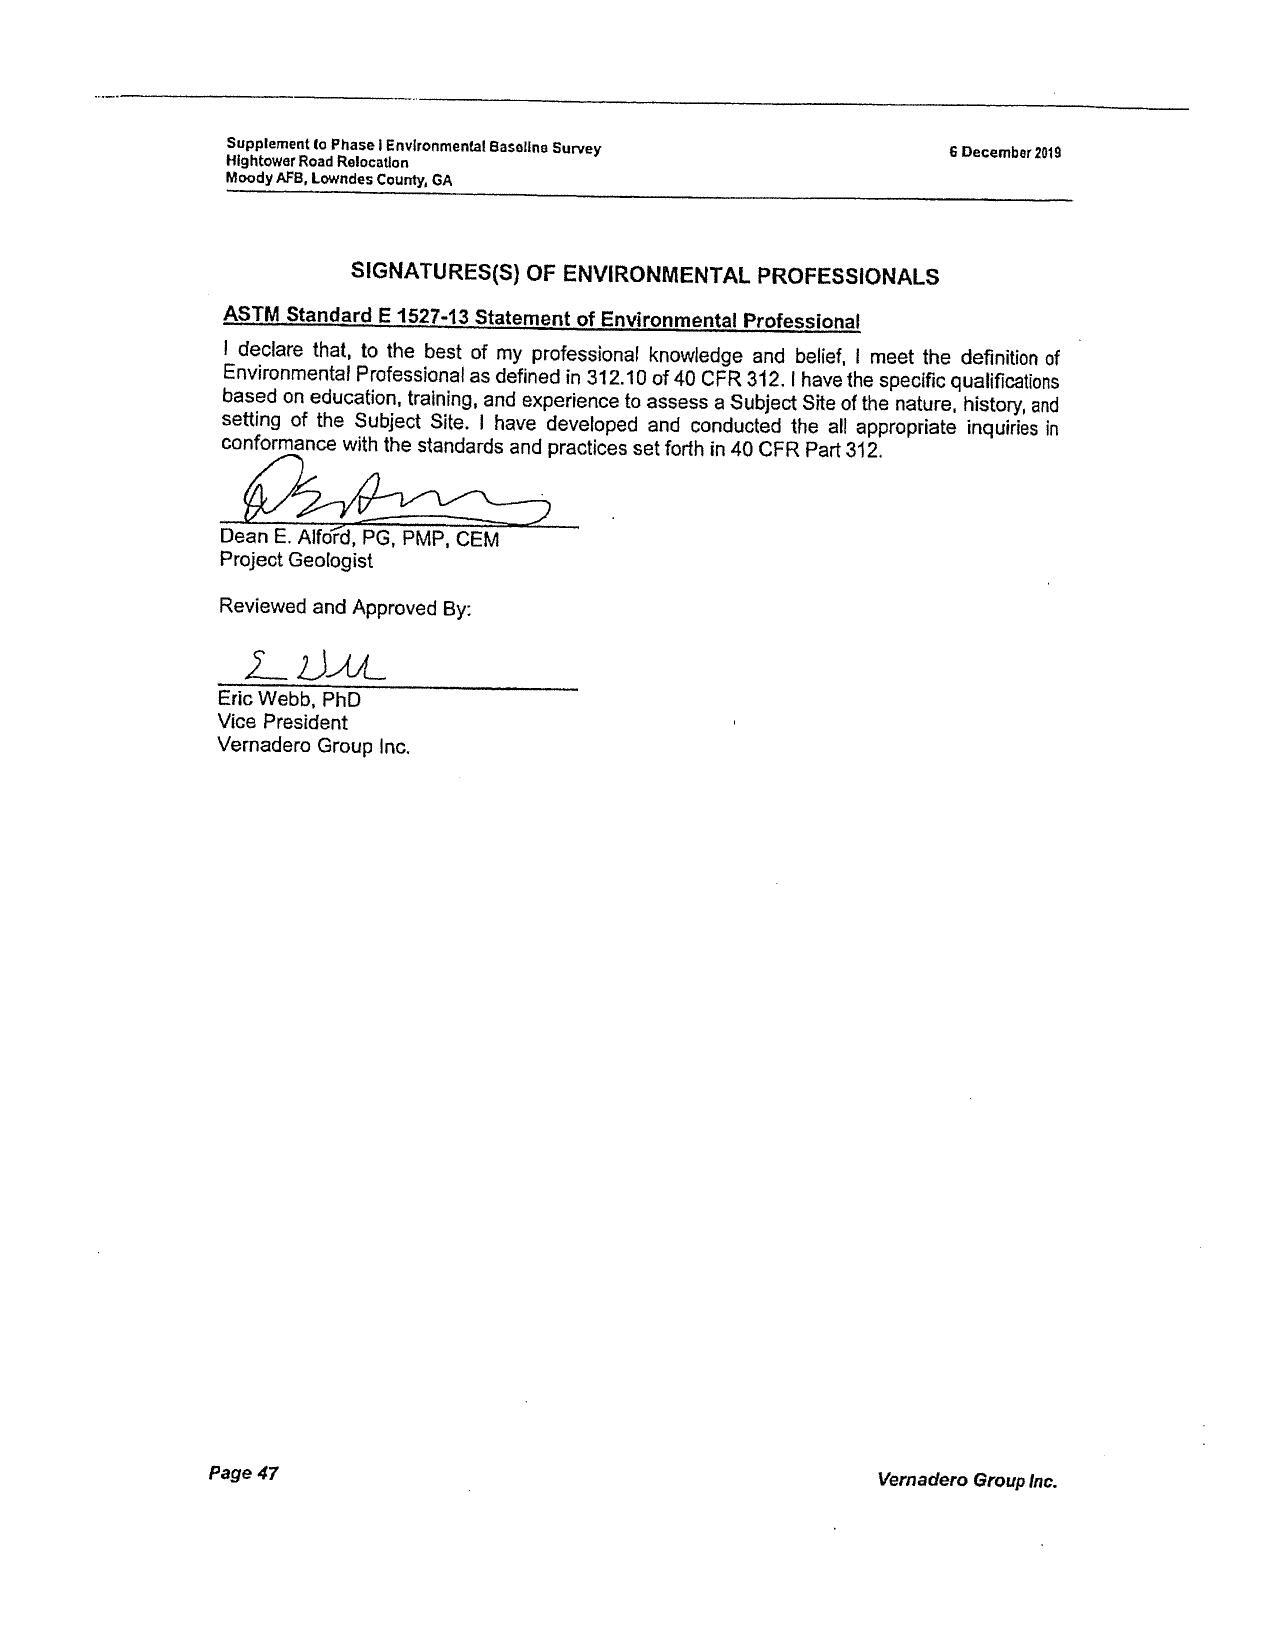 (again) Signature(s) of Environmental Professionals